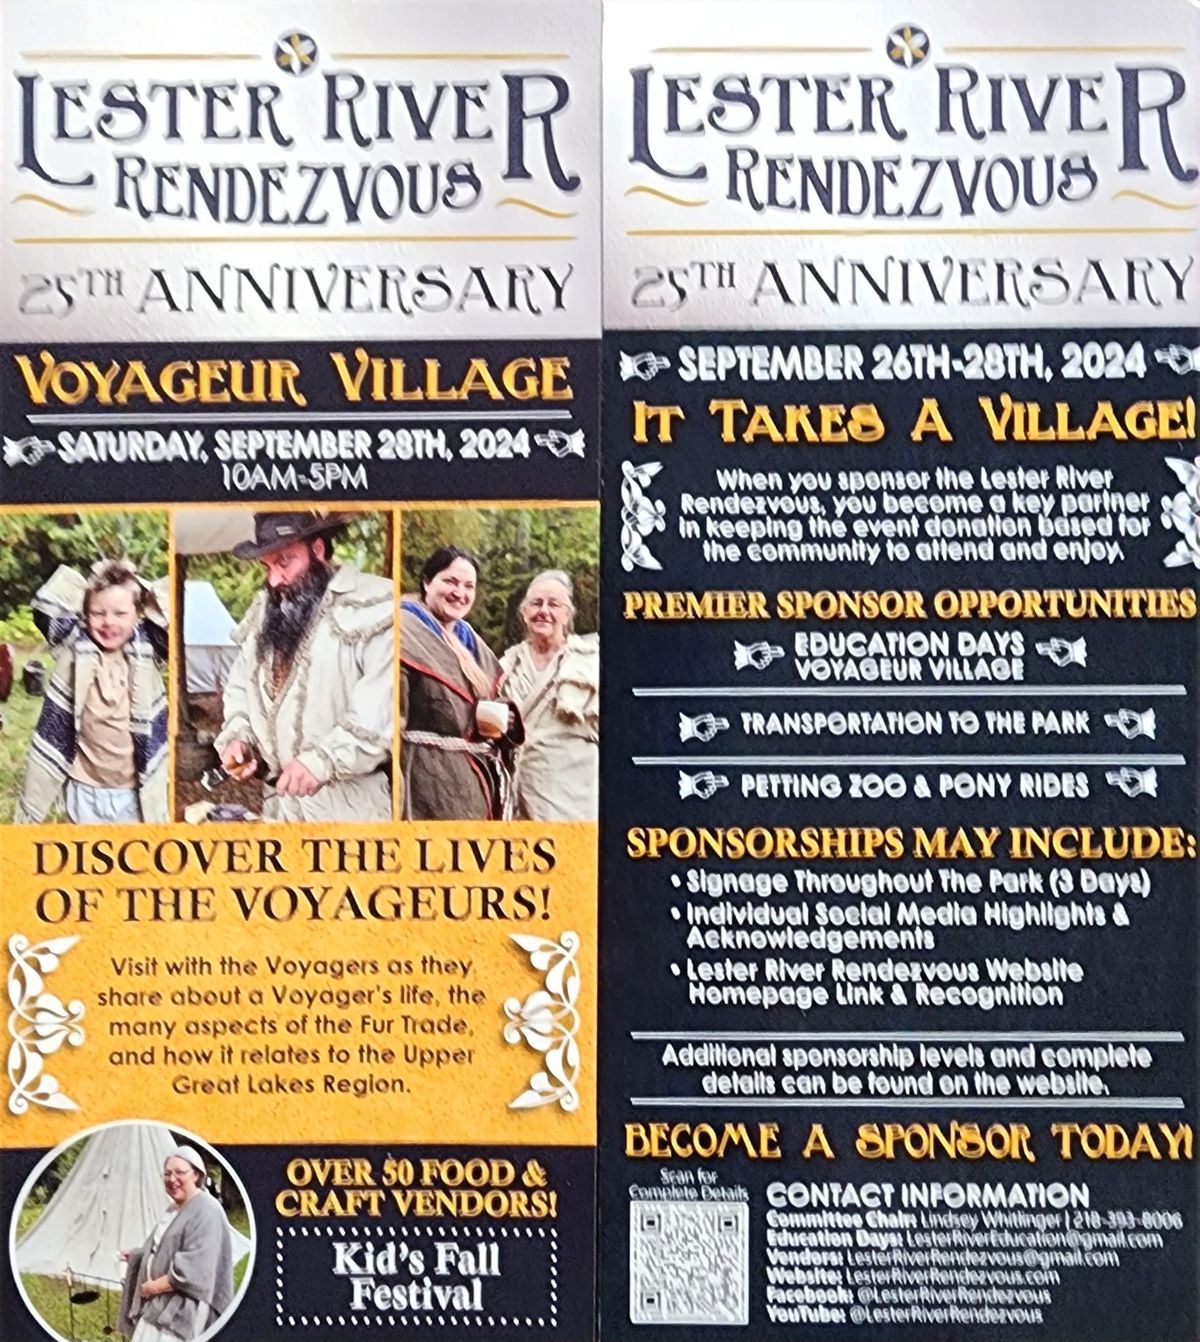 Lester River Rendezvous 